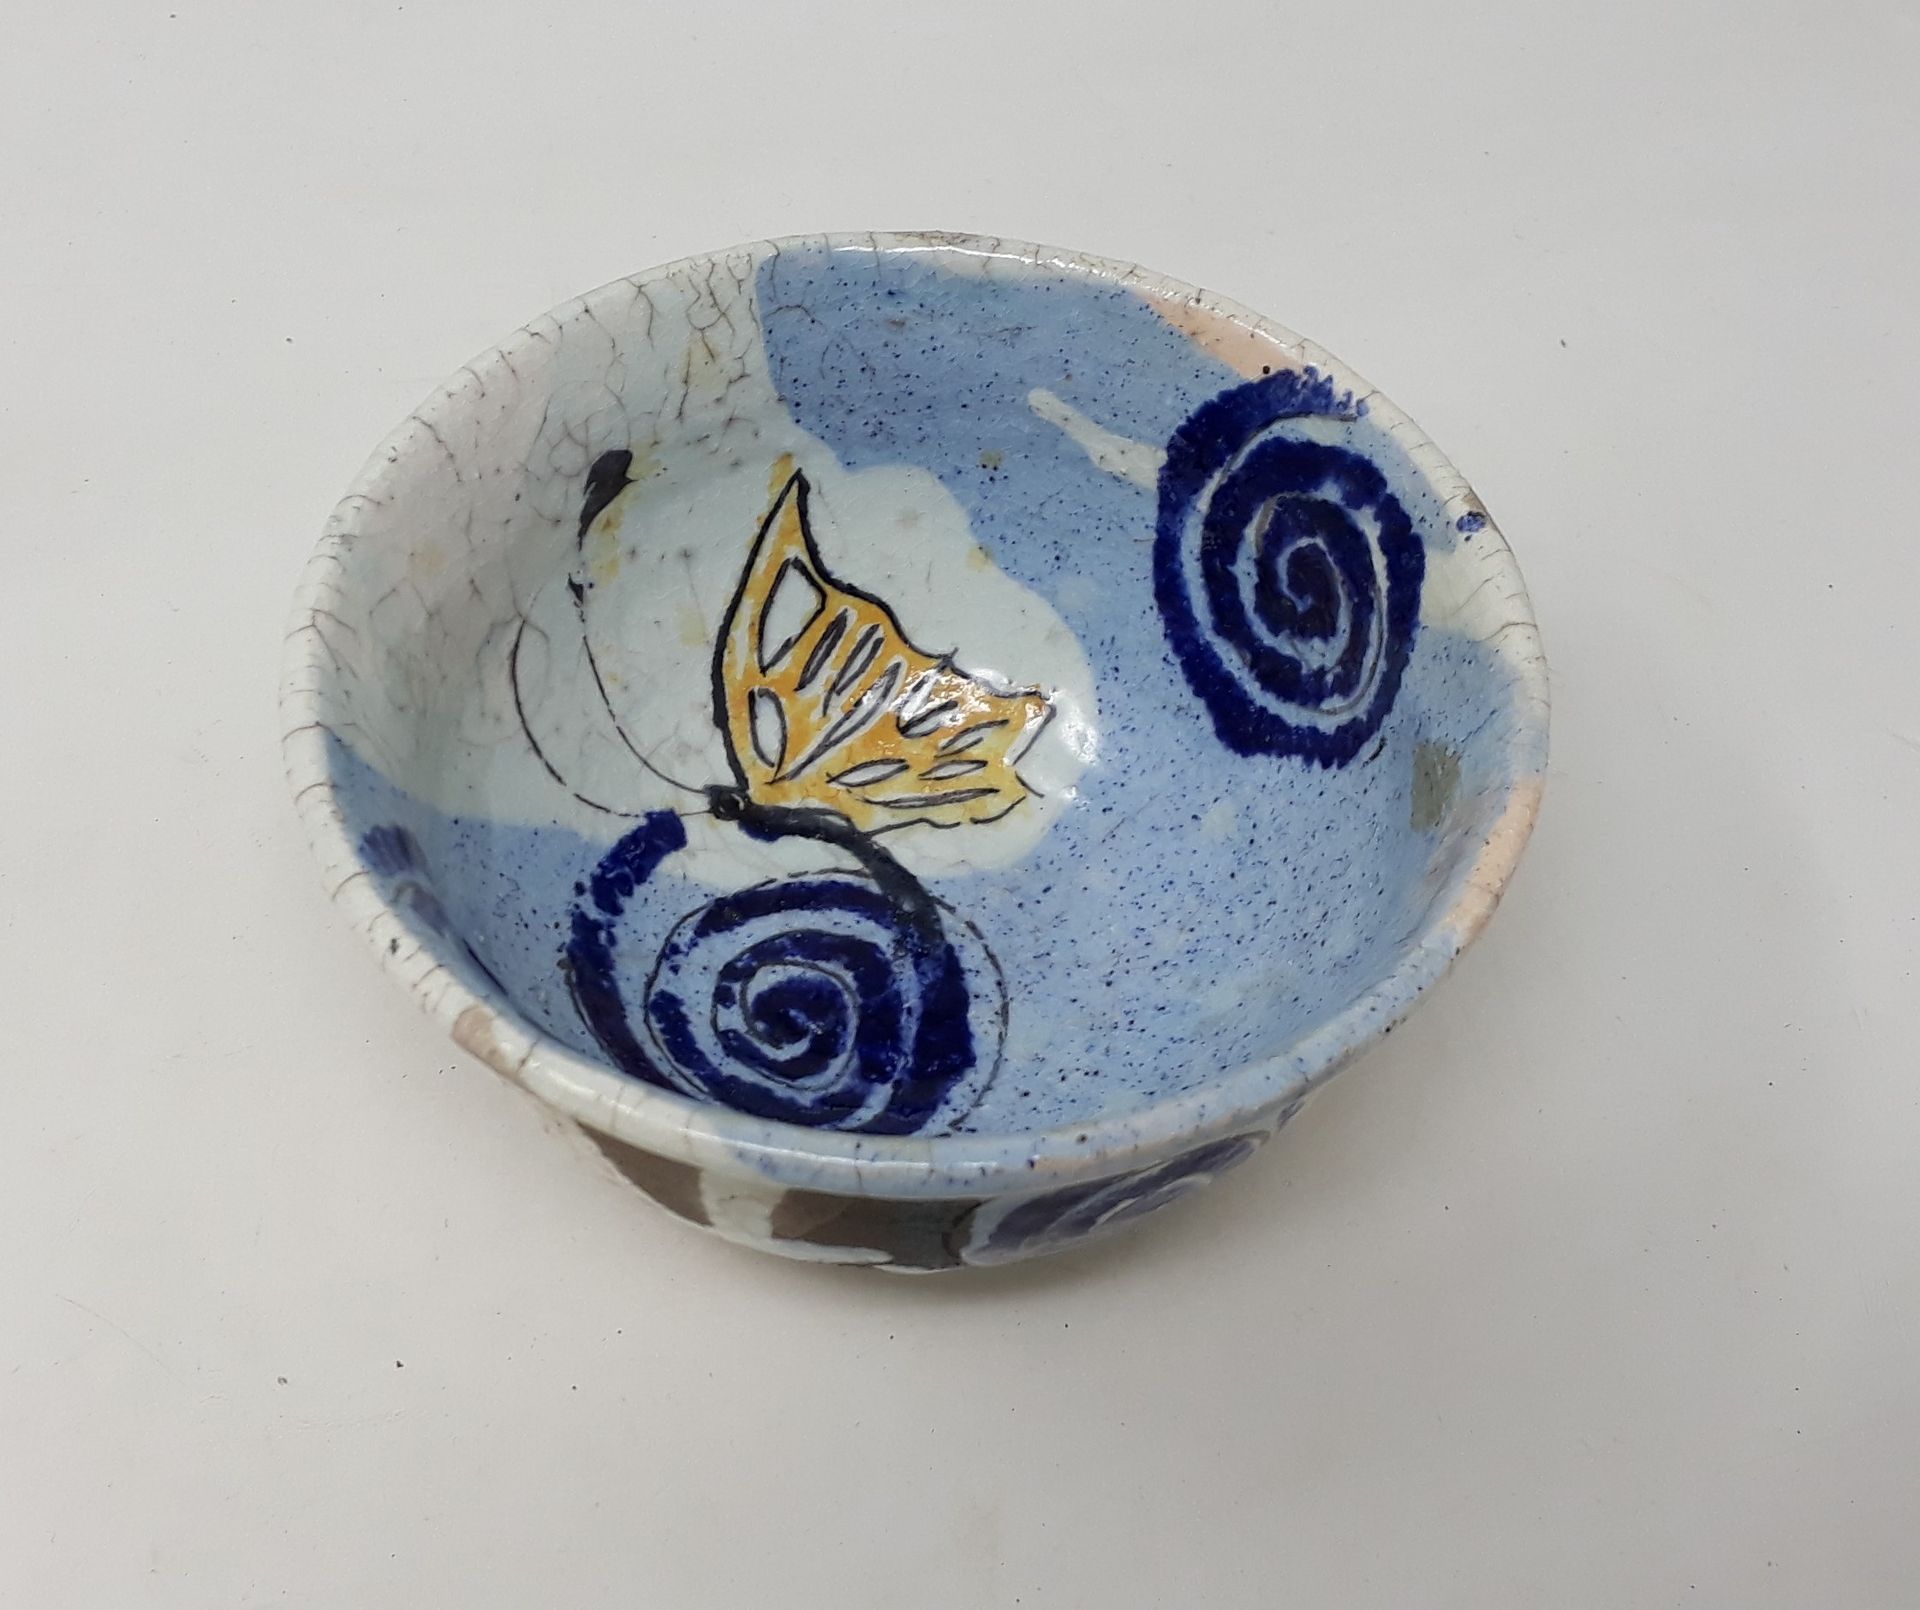 Null FITZPATRICK Christiane

拉库石器碗，带蝴蝶装饰，中空图案，碗跟下有编号186。

直径：12；高：6.5厘米